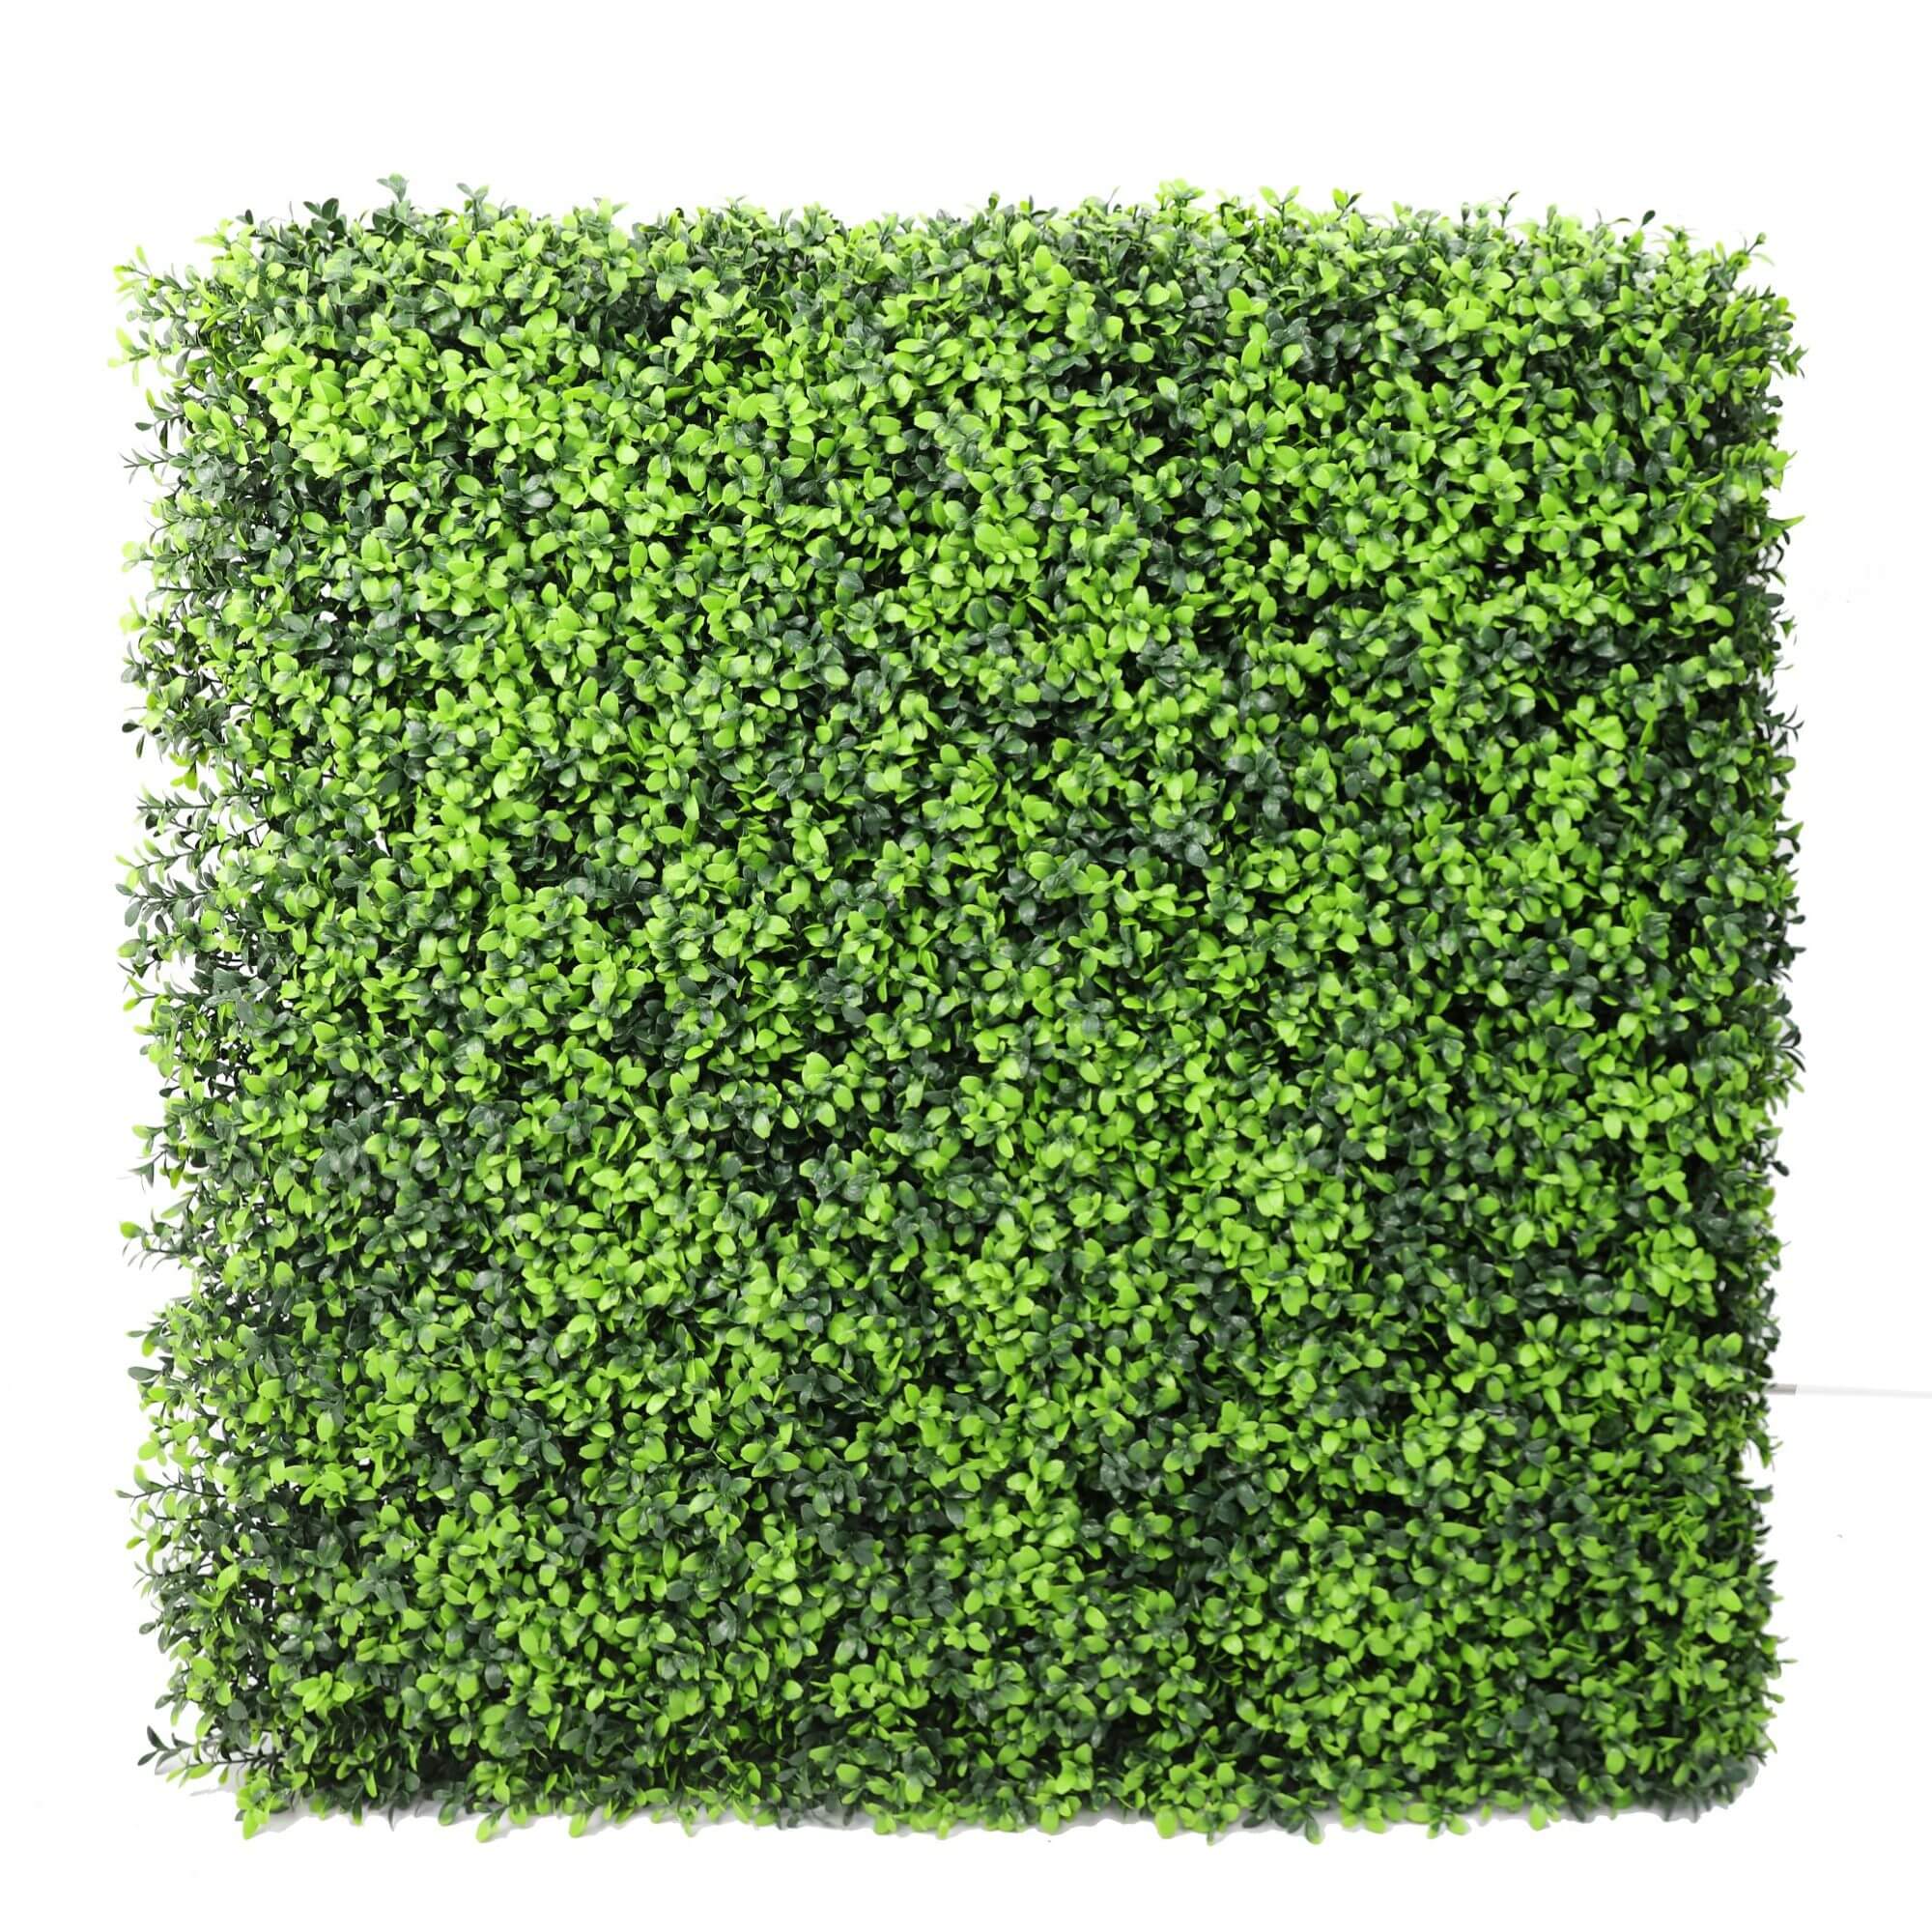 Portable Buxus Artificial Hedge UV Resistant 75cm x 75cm - Designer Vertical Gardens artificial garden wall plants artificial green wall australia